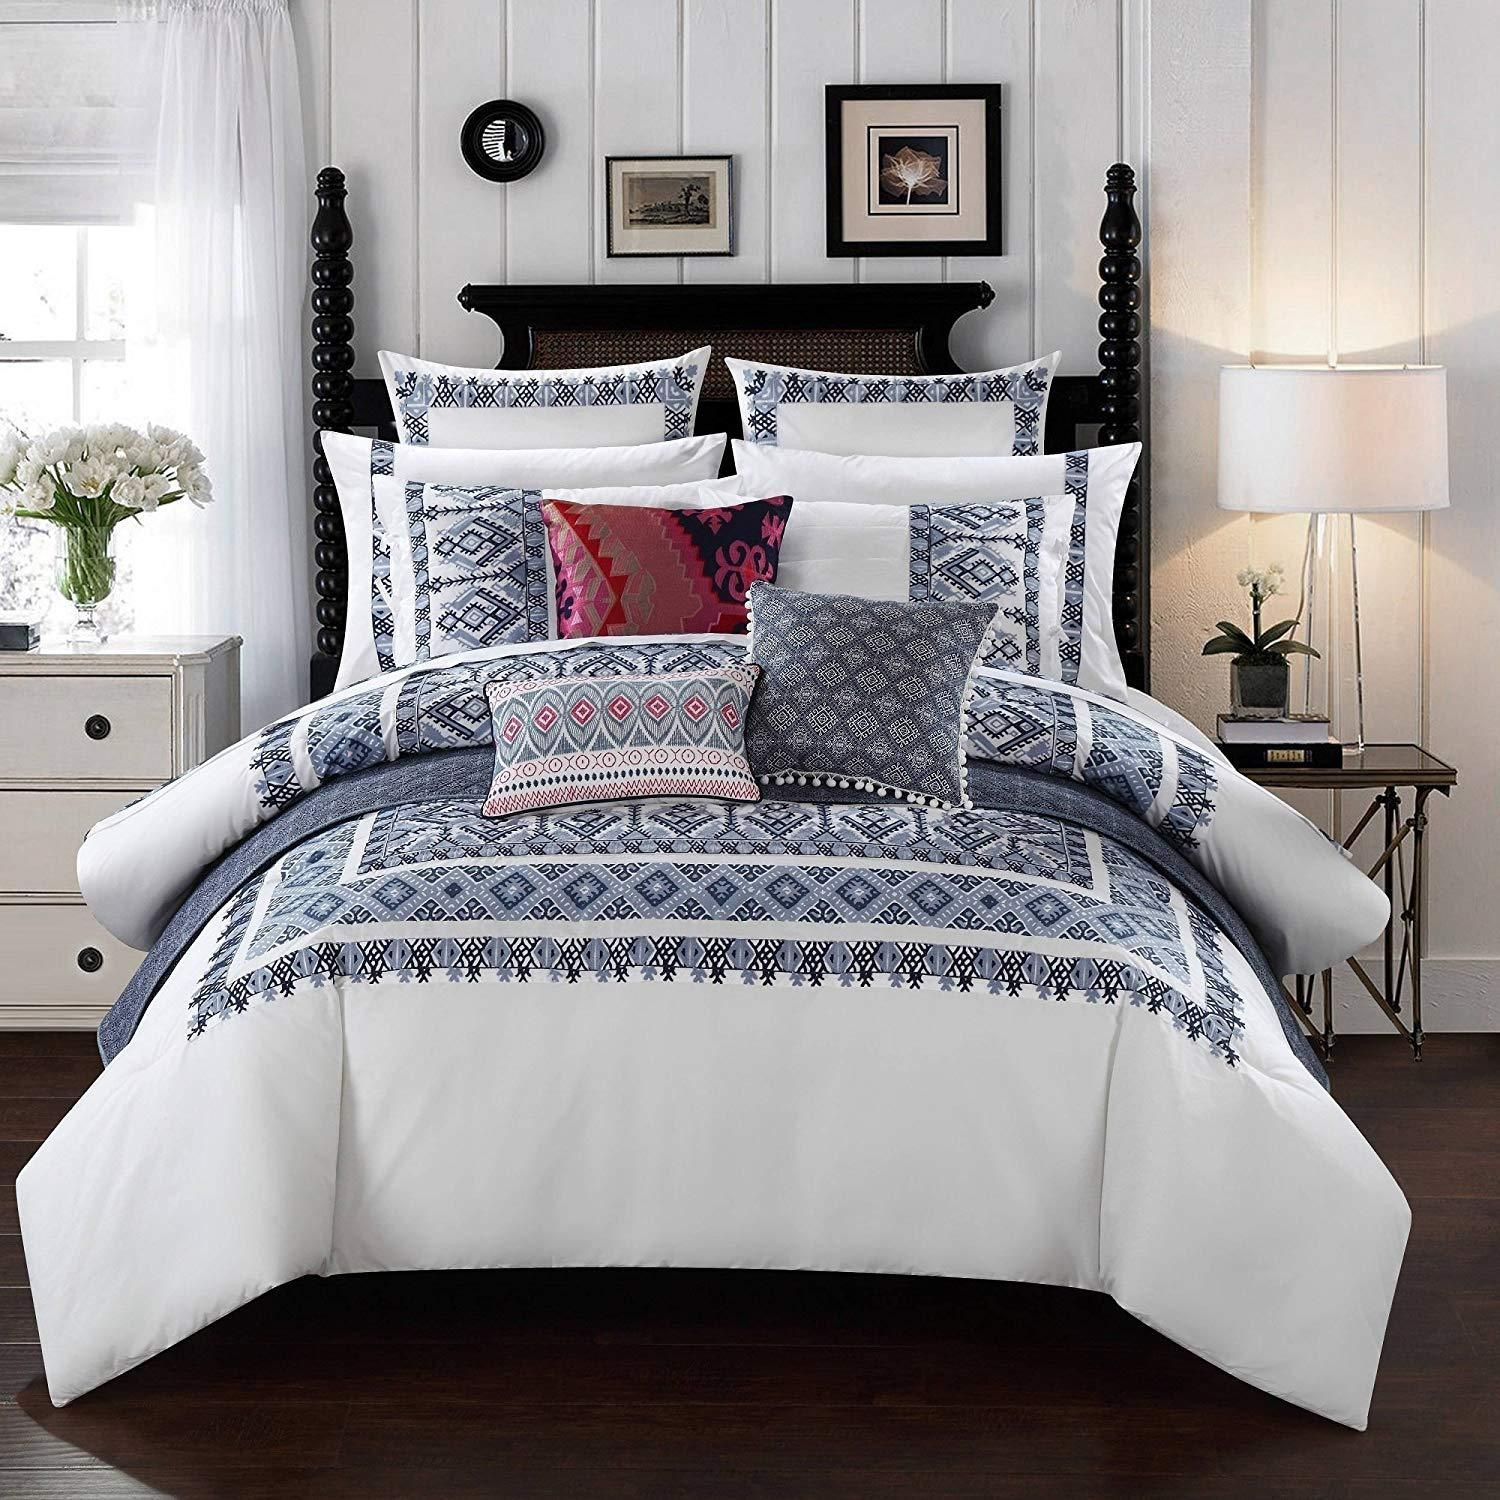 Master Bedroom Bedding Sets
 Navy White Embroidered forter Full Queen Set Blue